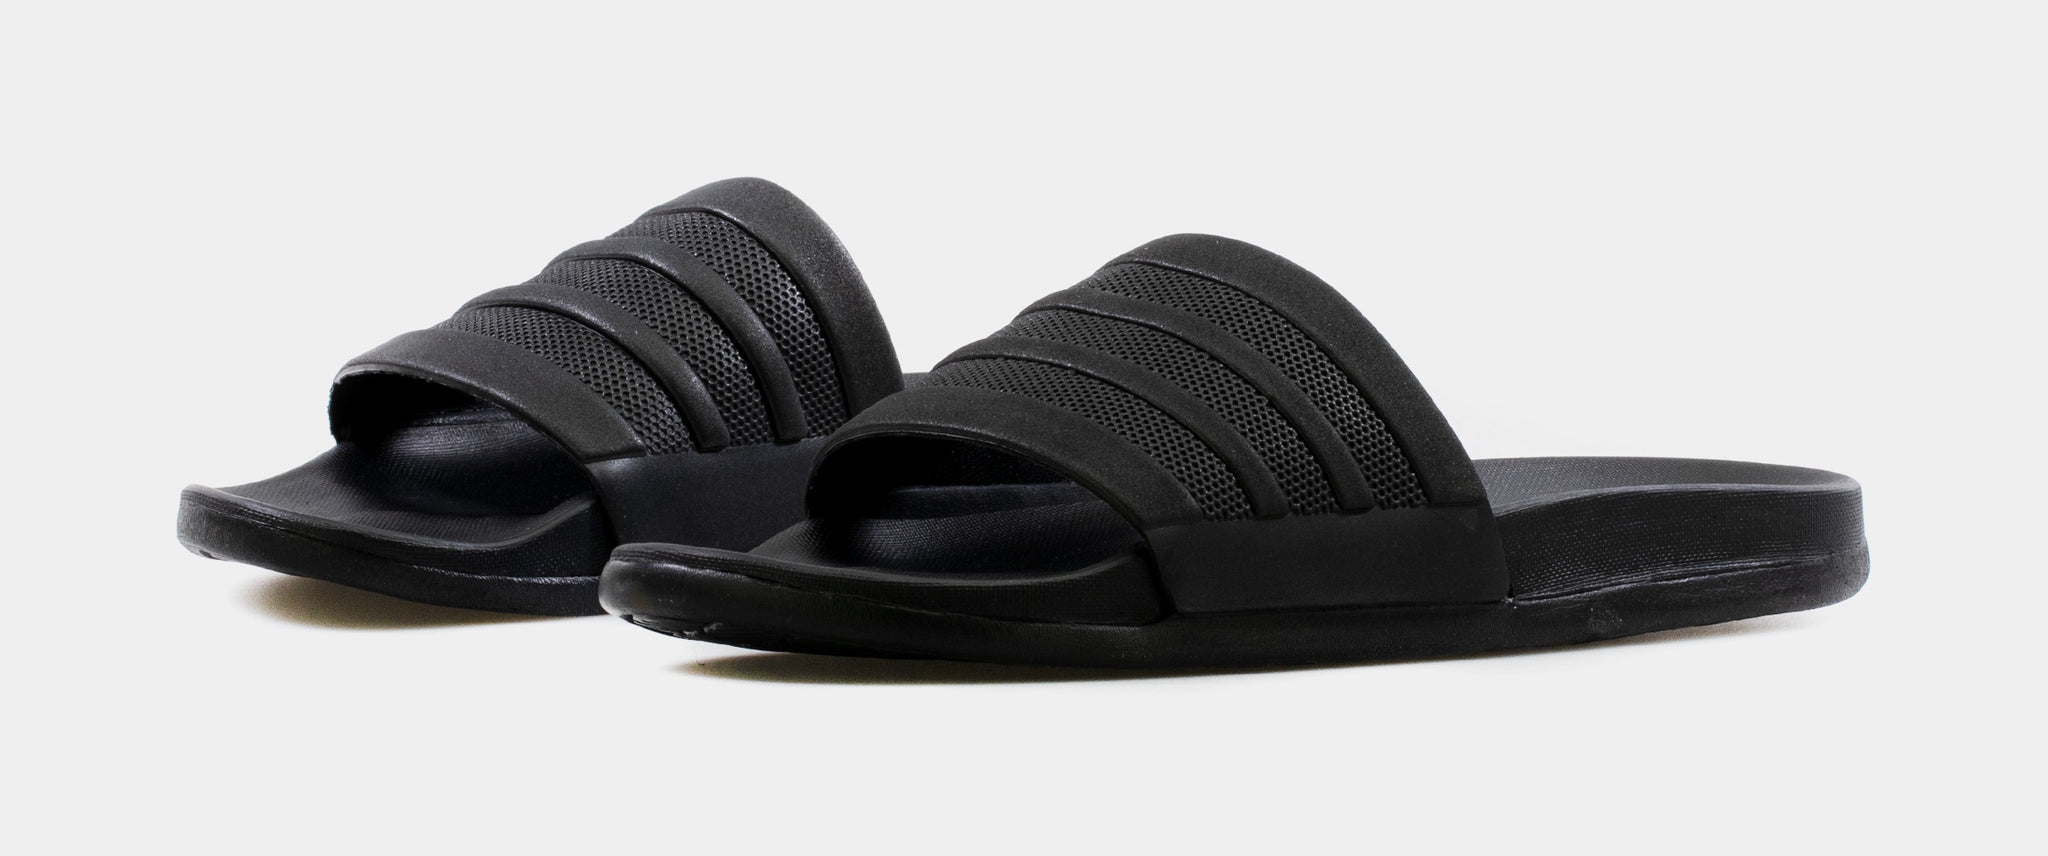 Plus Adilette Shoe Palace S82137 Mono Cloudfoam Slide adidas – Mens Sandal Black